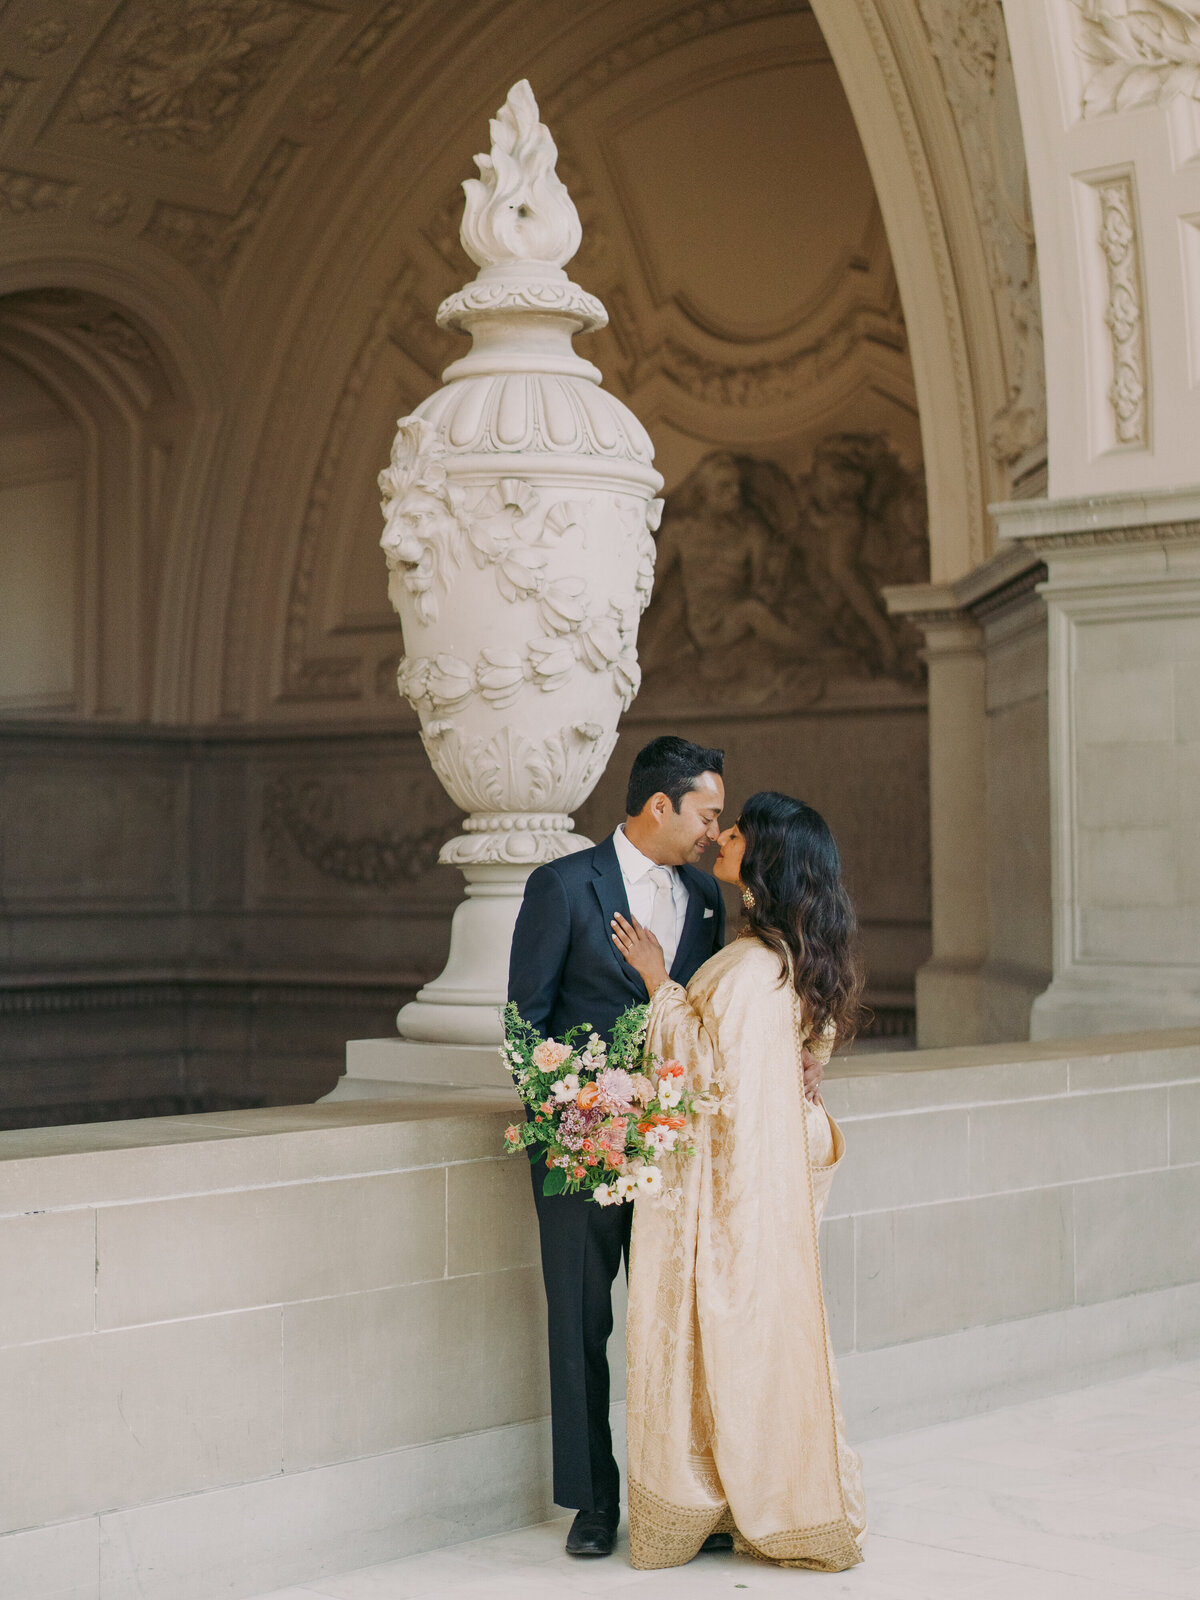 Abi + Alfred San Francisco City Hall Elopement Wedding Cassie Valente Photography 0170